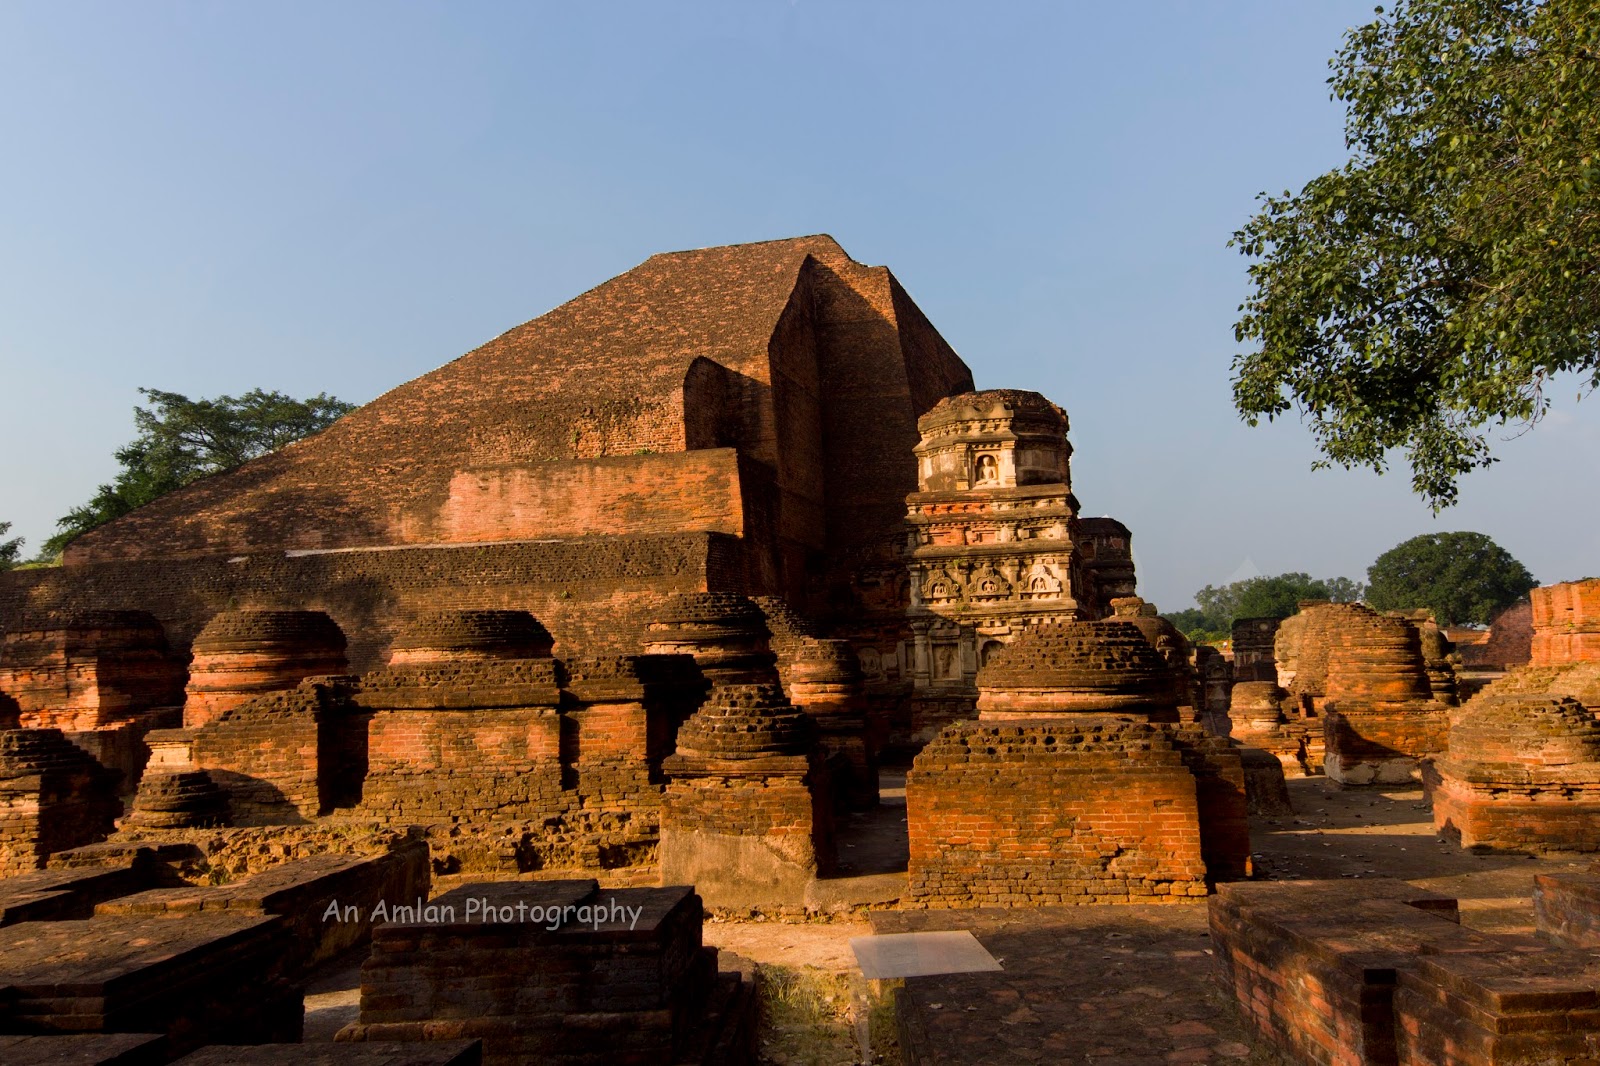 Payer talay shorshe: Nalanda - Ruins of world's oldest ...